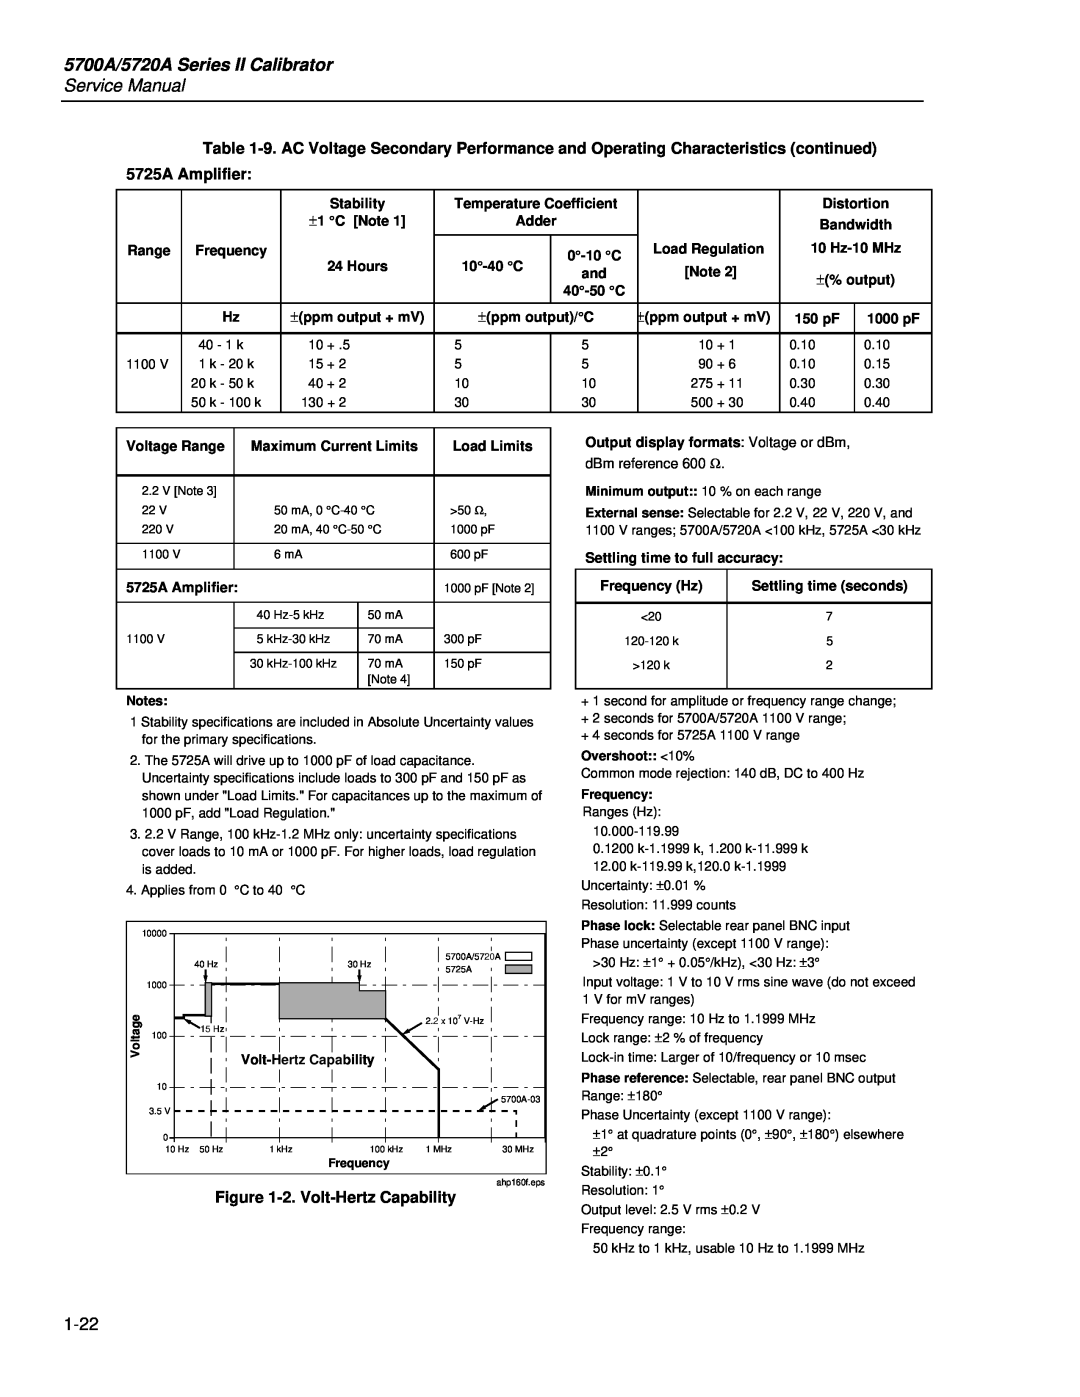 Fluke 5700A/5720A Series II Calibrator, Service Manual, 5725A Amplifier, 2. Volt-Hertz Capability, dBm reference 600 Ω 